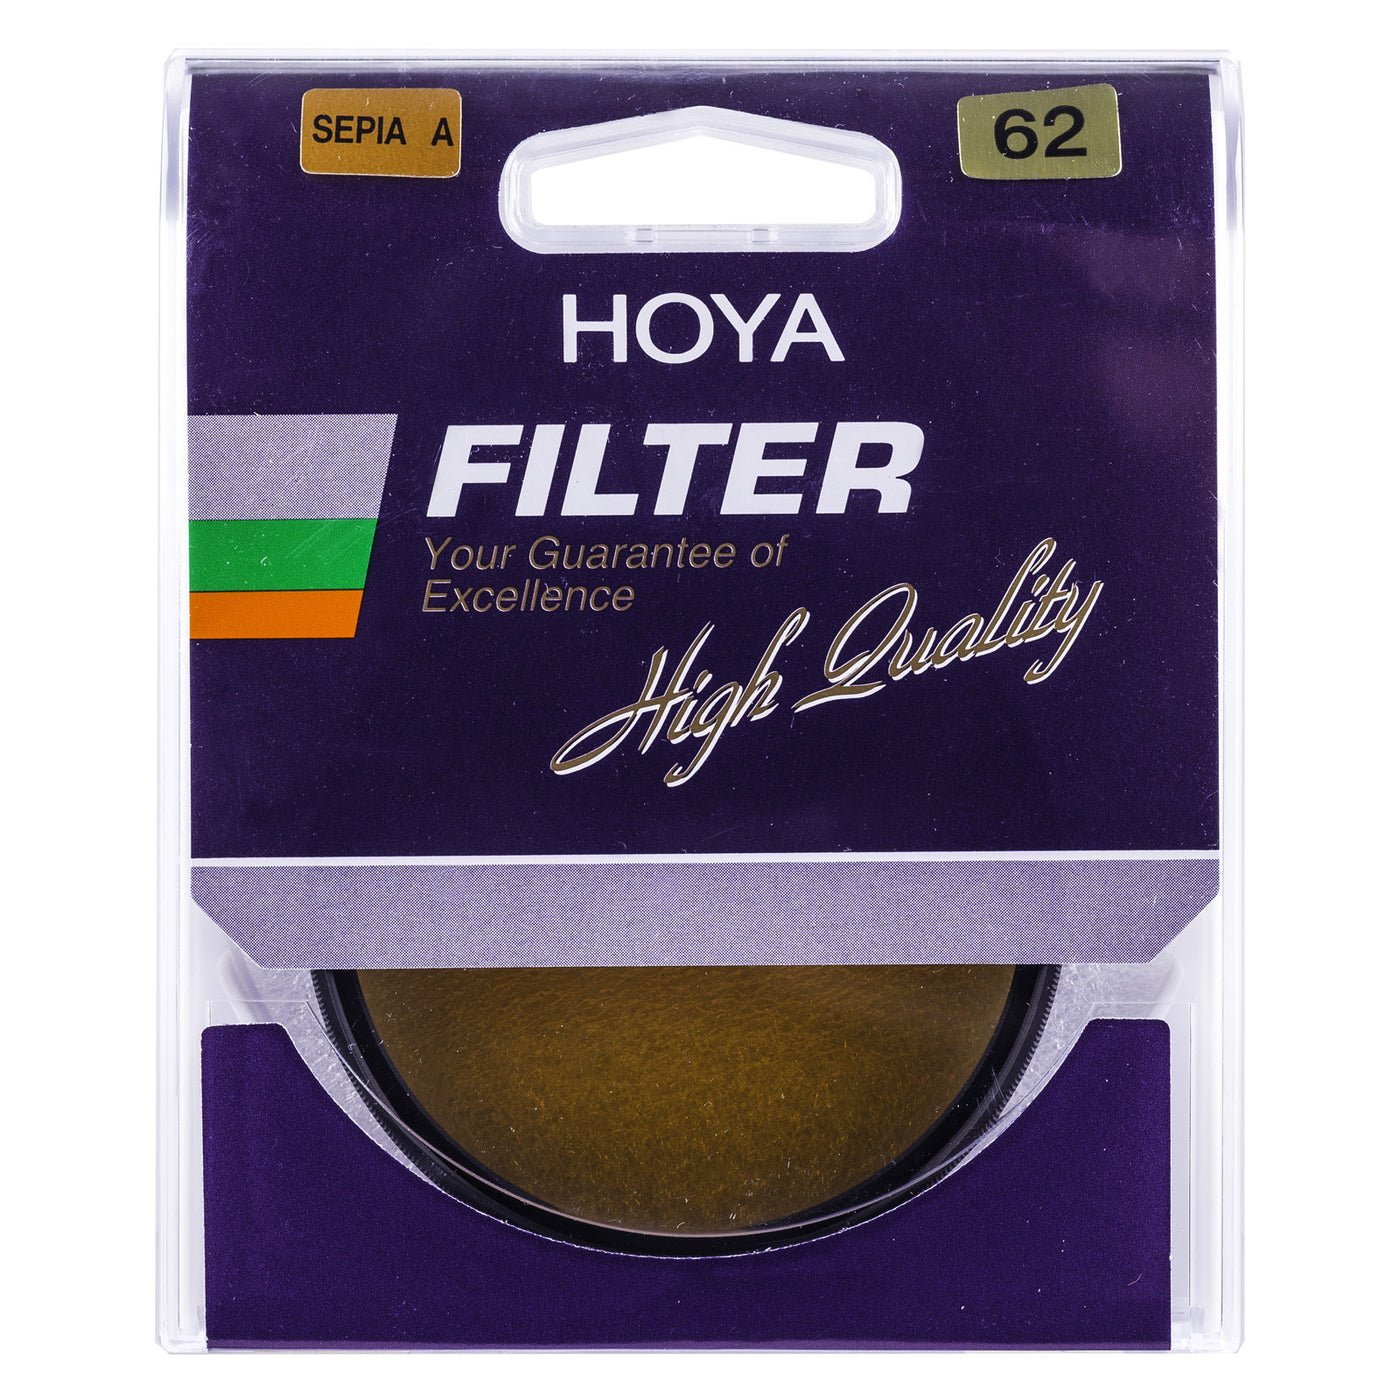 Hoya S-Sepia Filter Box